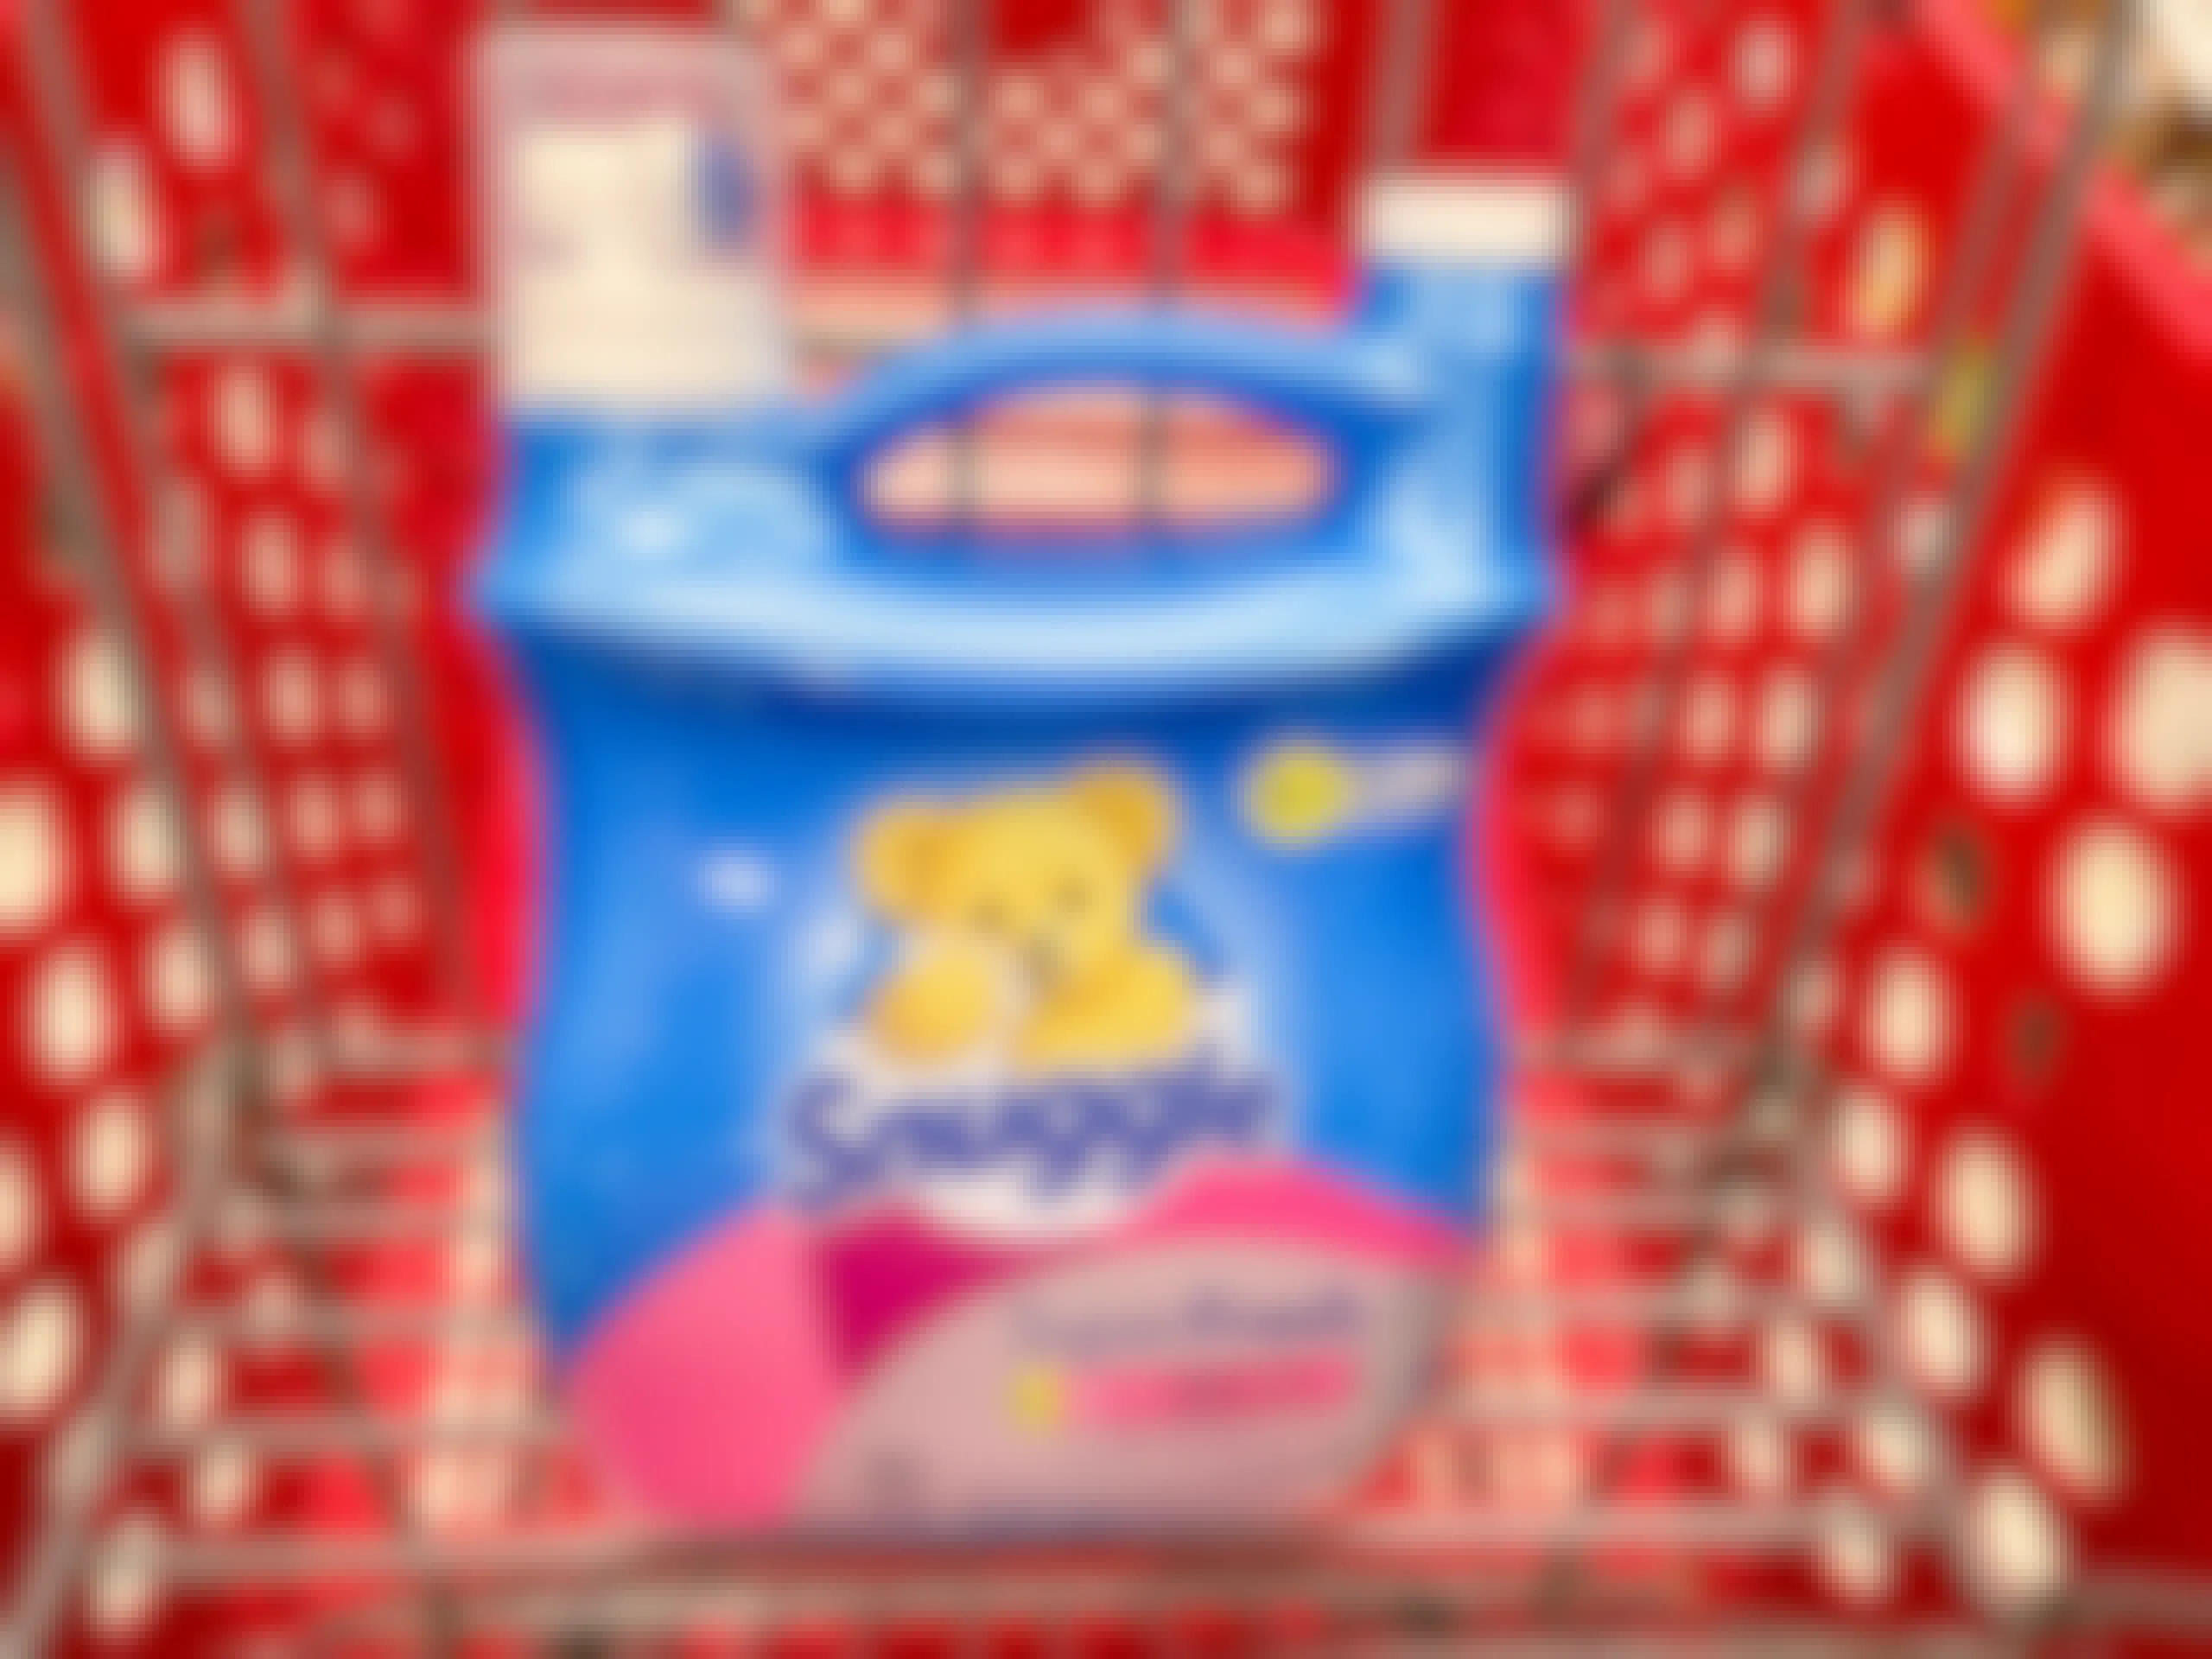 A jug of Snuggle Super fresh fabric softener sitting in a shopping cart.